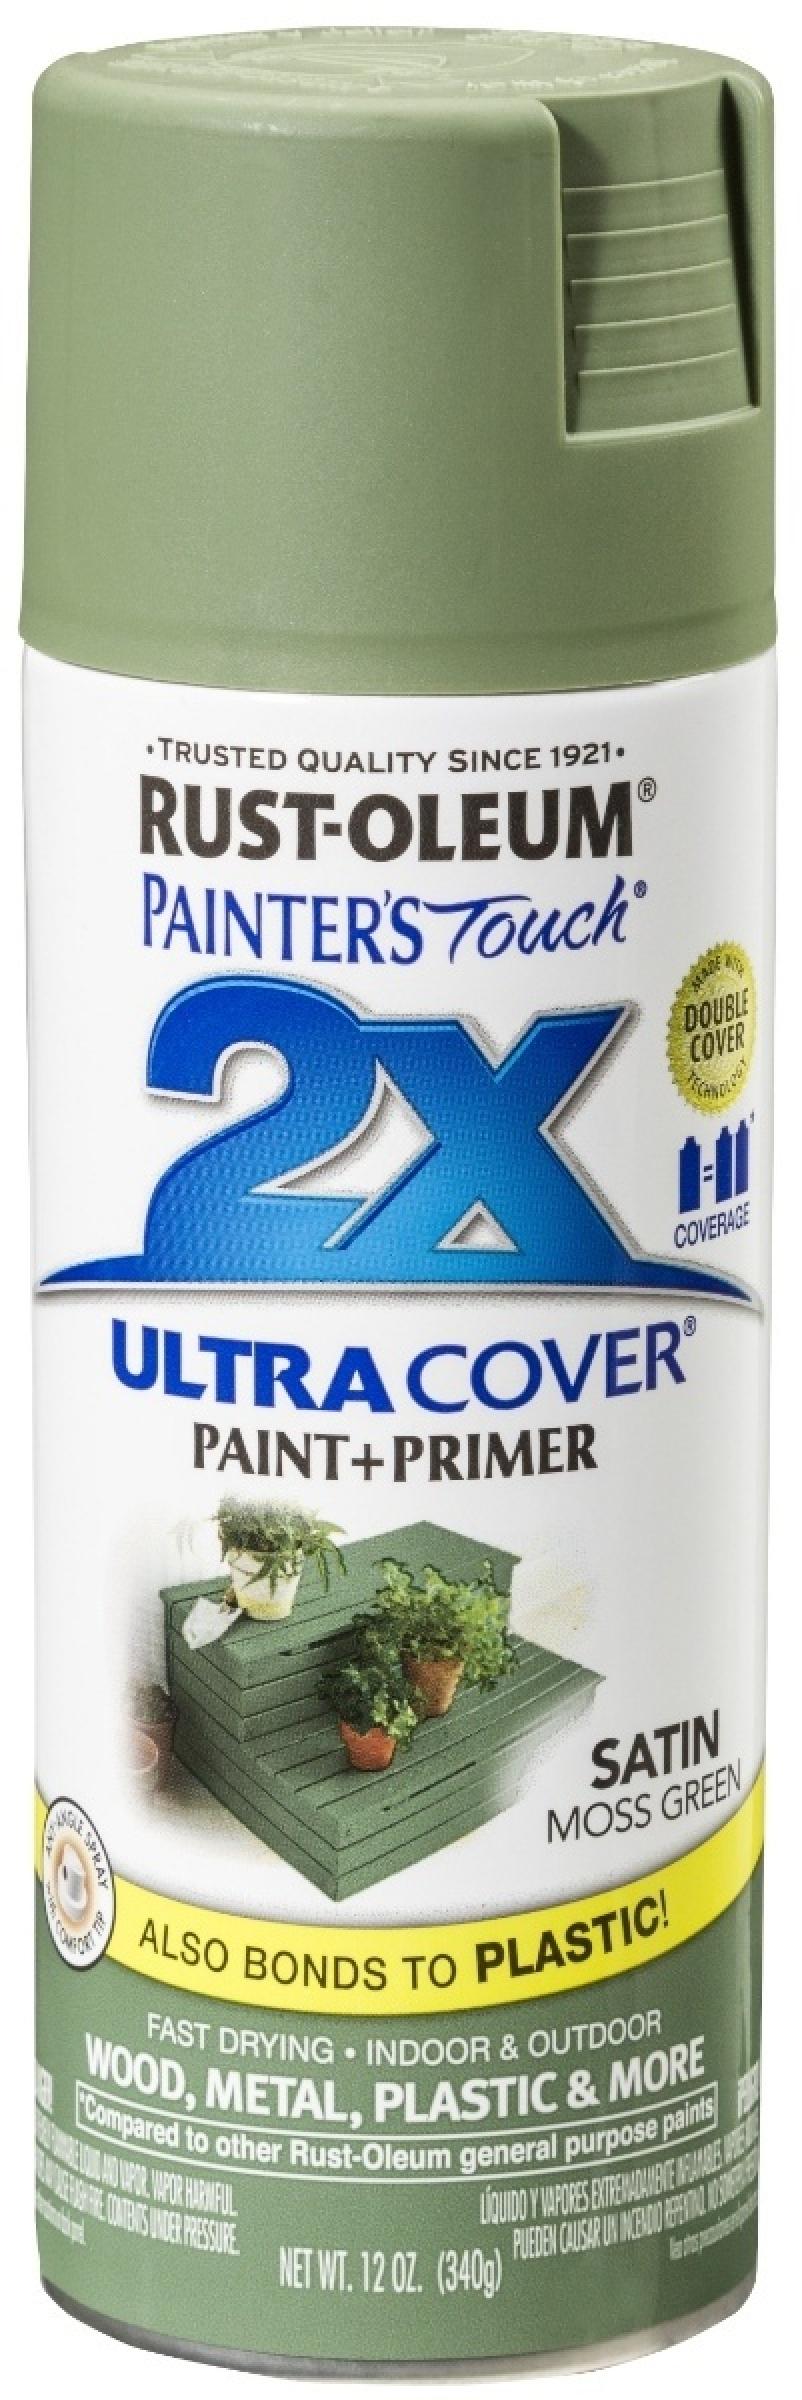 2X Ultra Cover Satin Spray